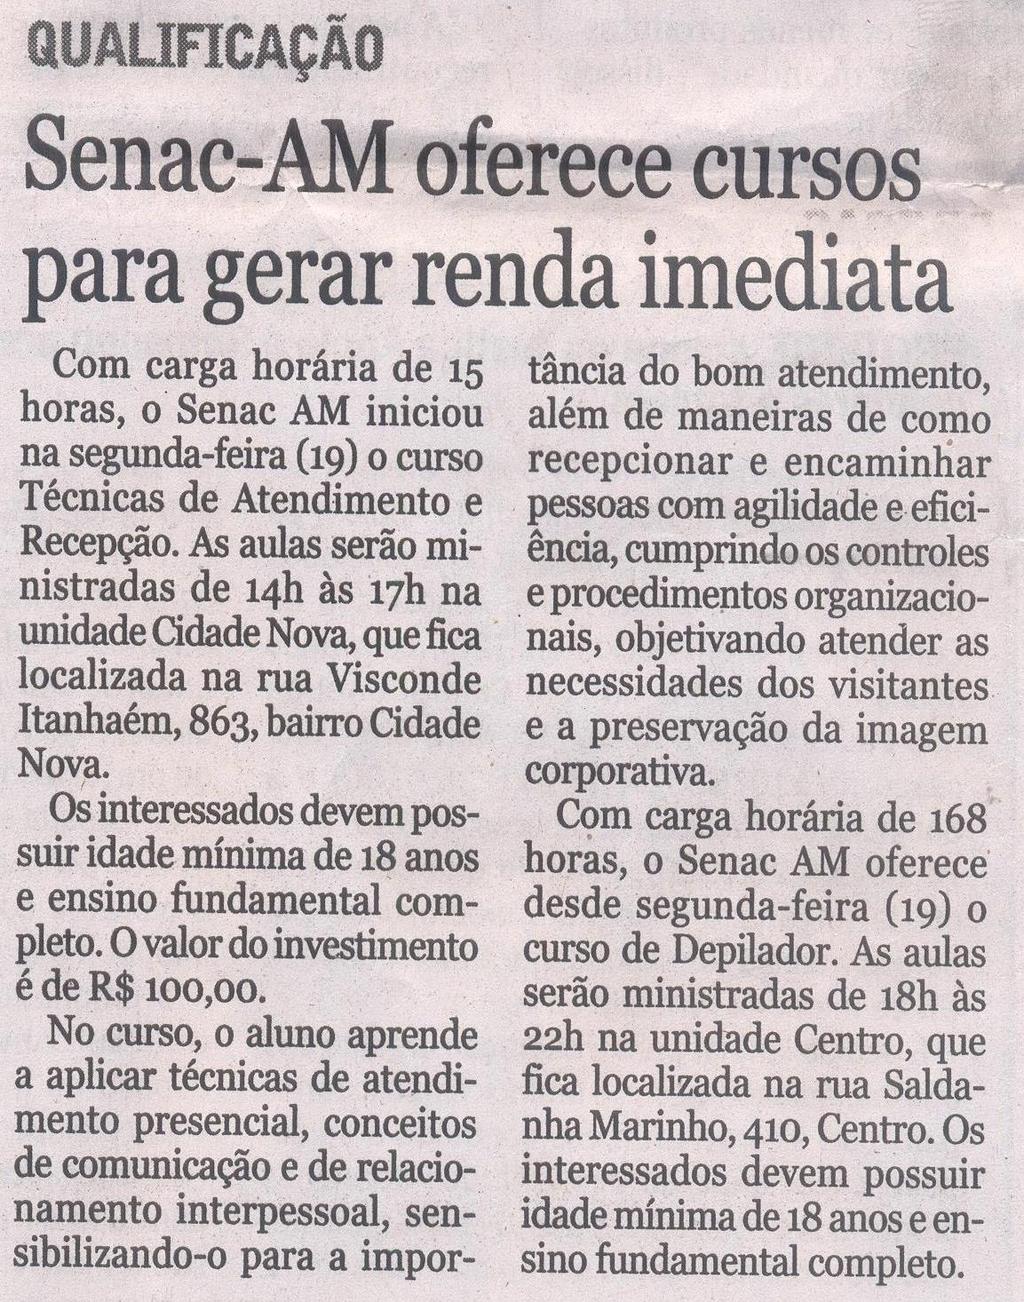 Meio: Jornal do Commercio Editoria: